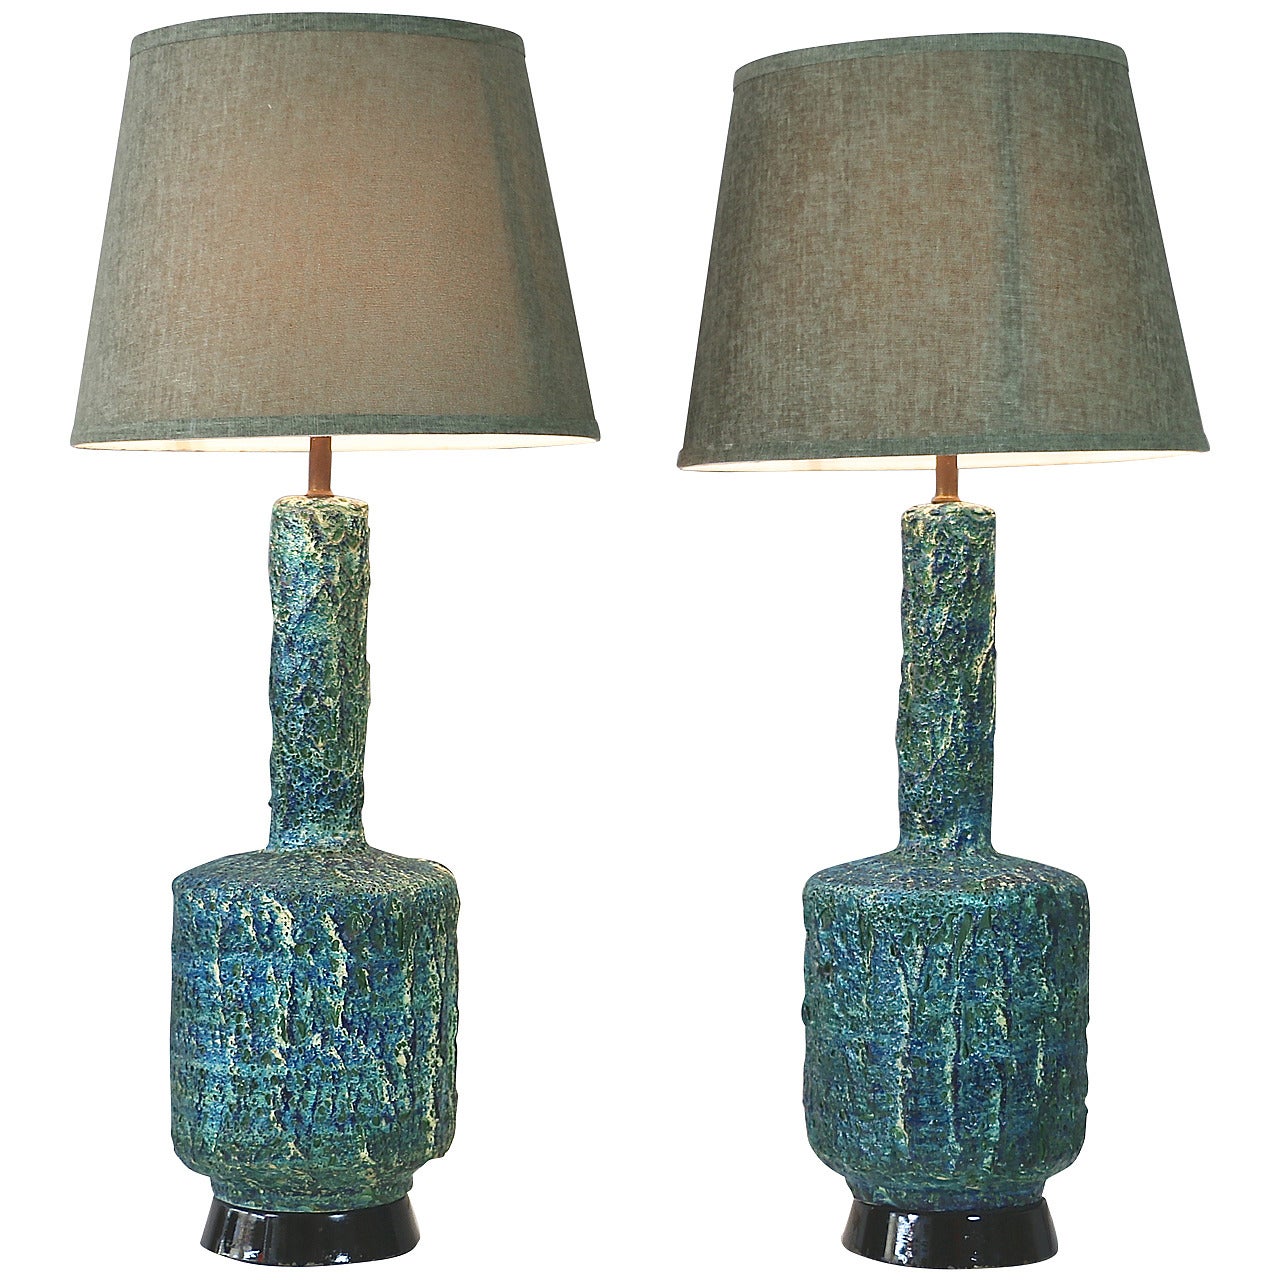 1970s Pair of Ceramic Table Lamps